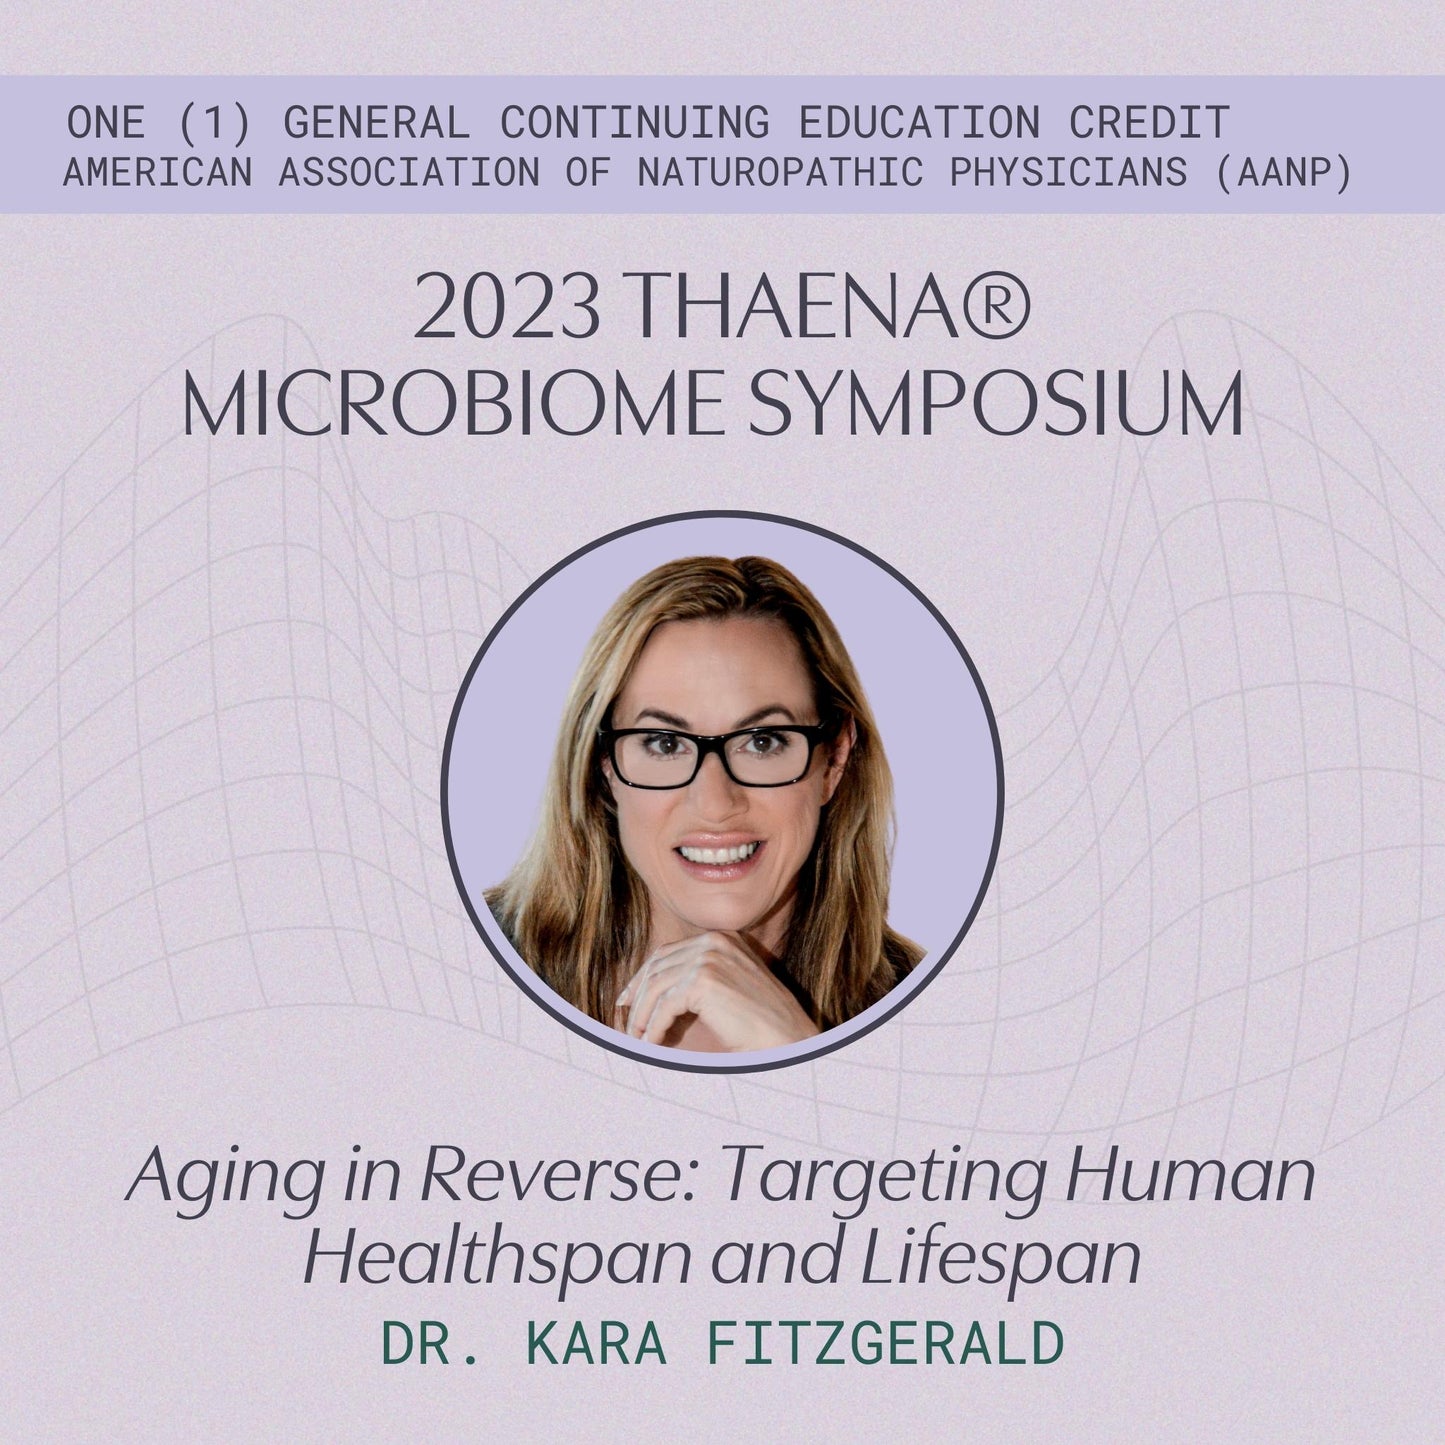 Kara Fitzgerald ND, IFMCP - Aging in Reverse: Targeting Human Healthspan and Lifespan (1 General CE Credit)